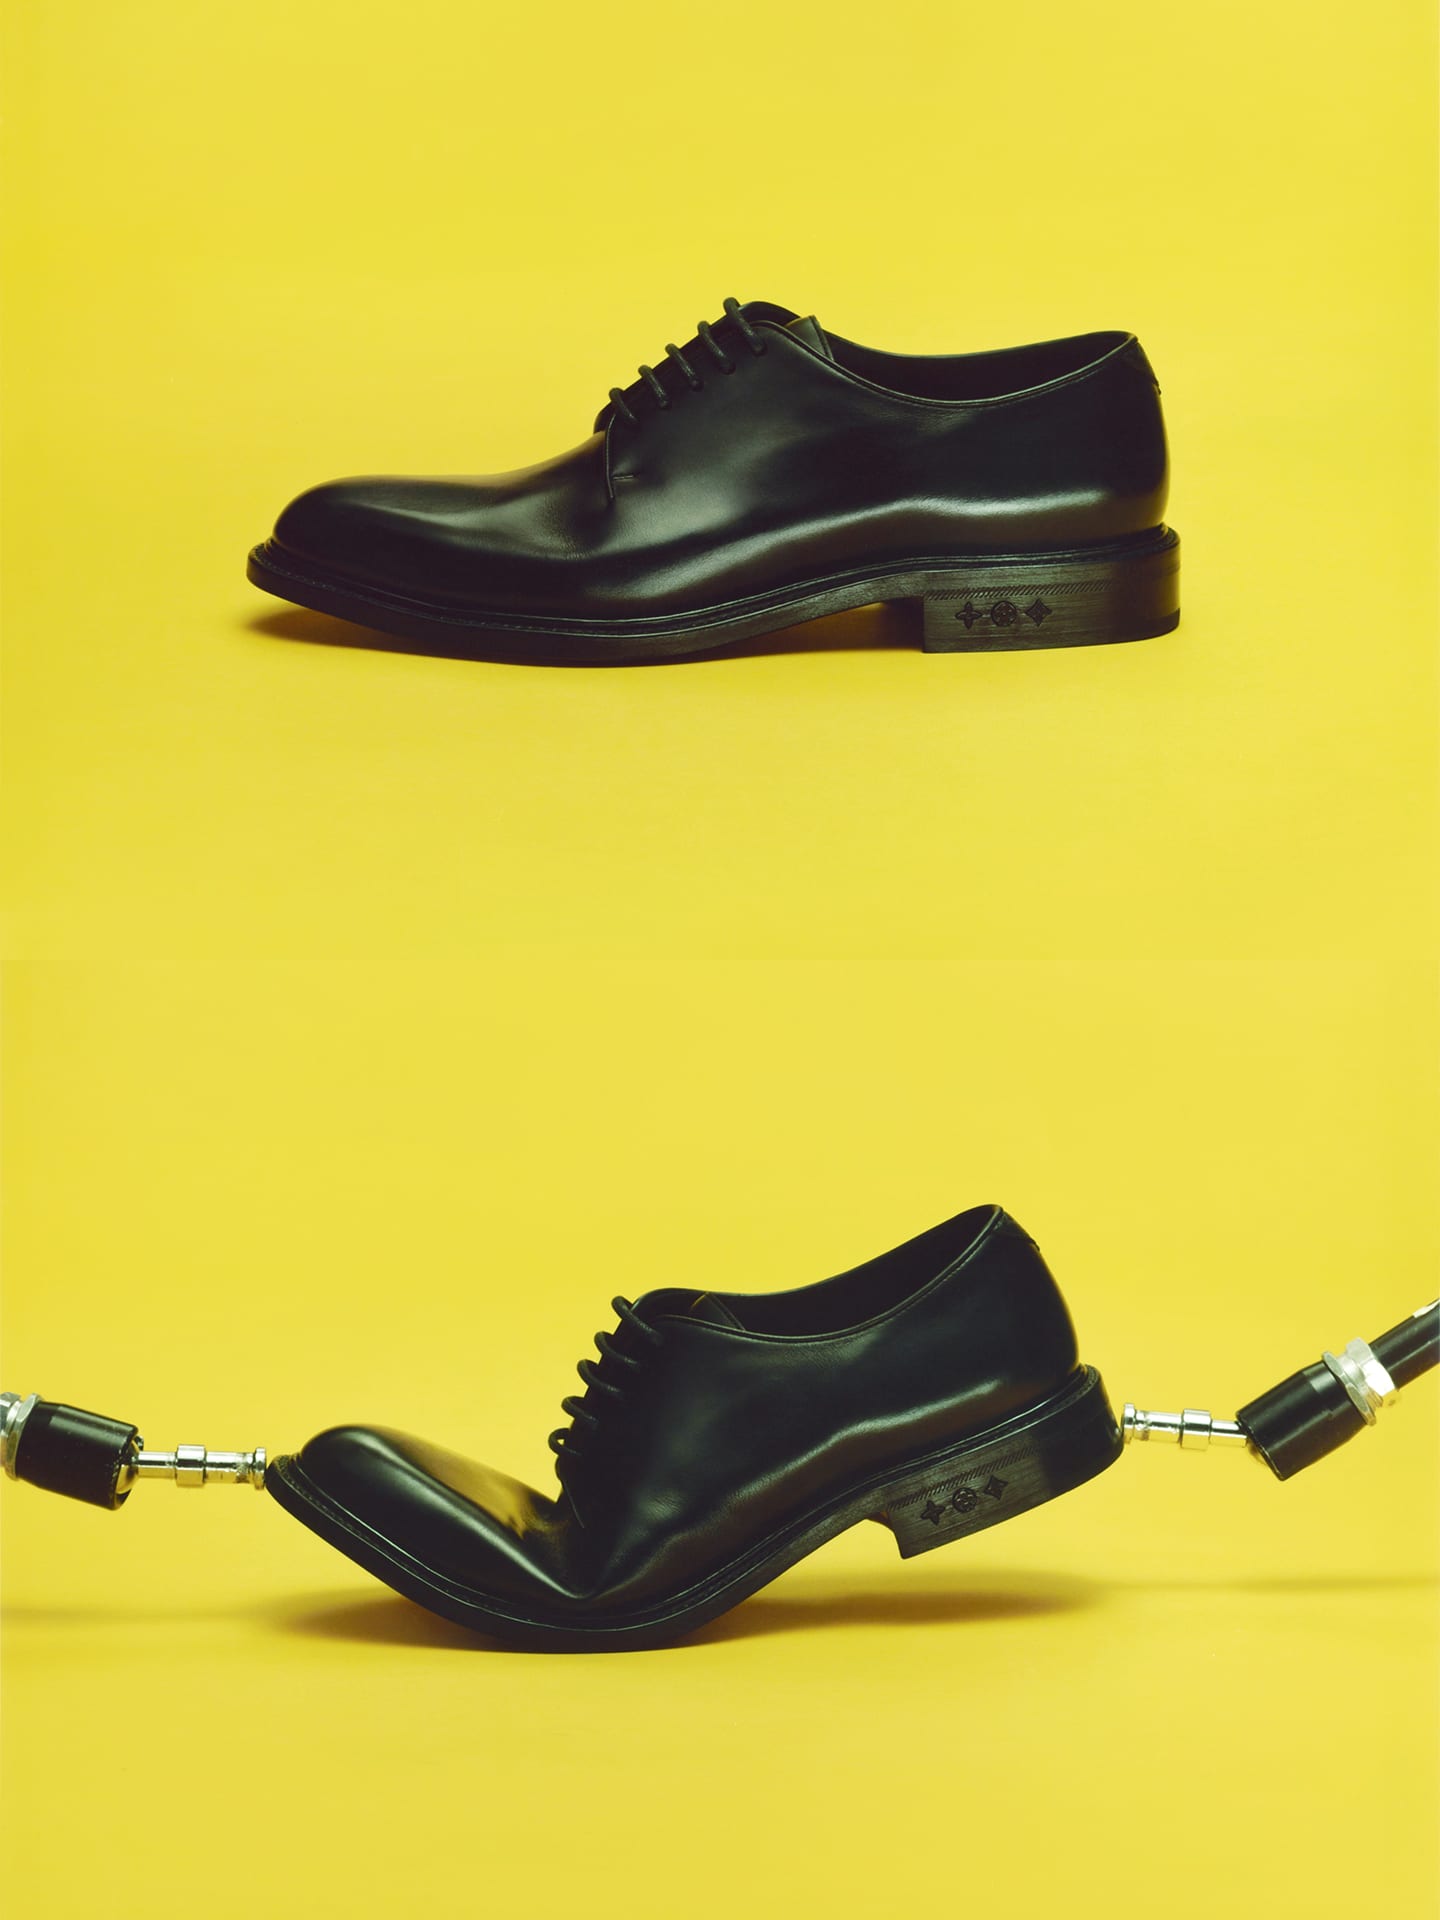 Louis Vuitton classic men's casual business leather shoes